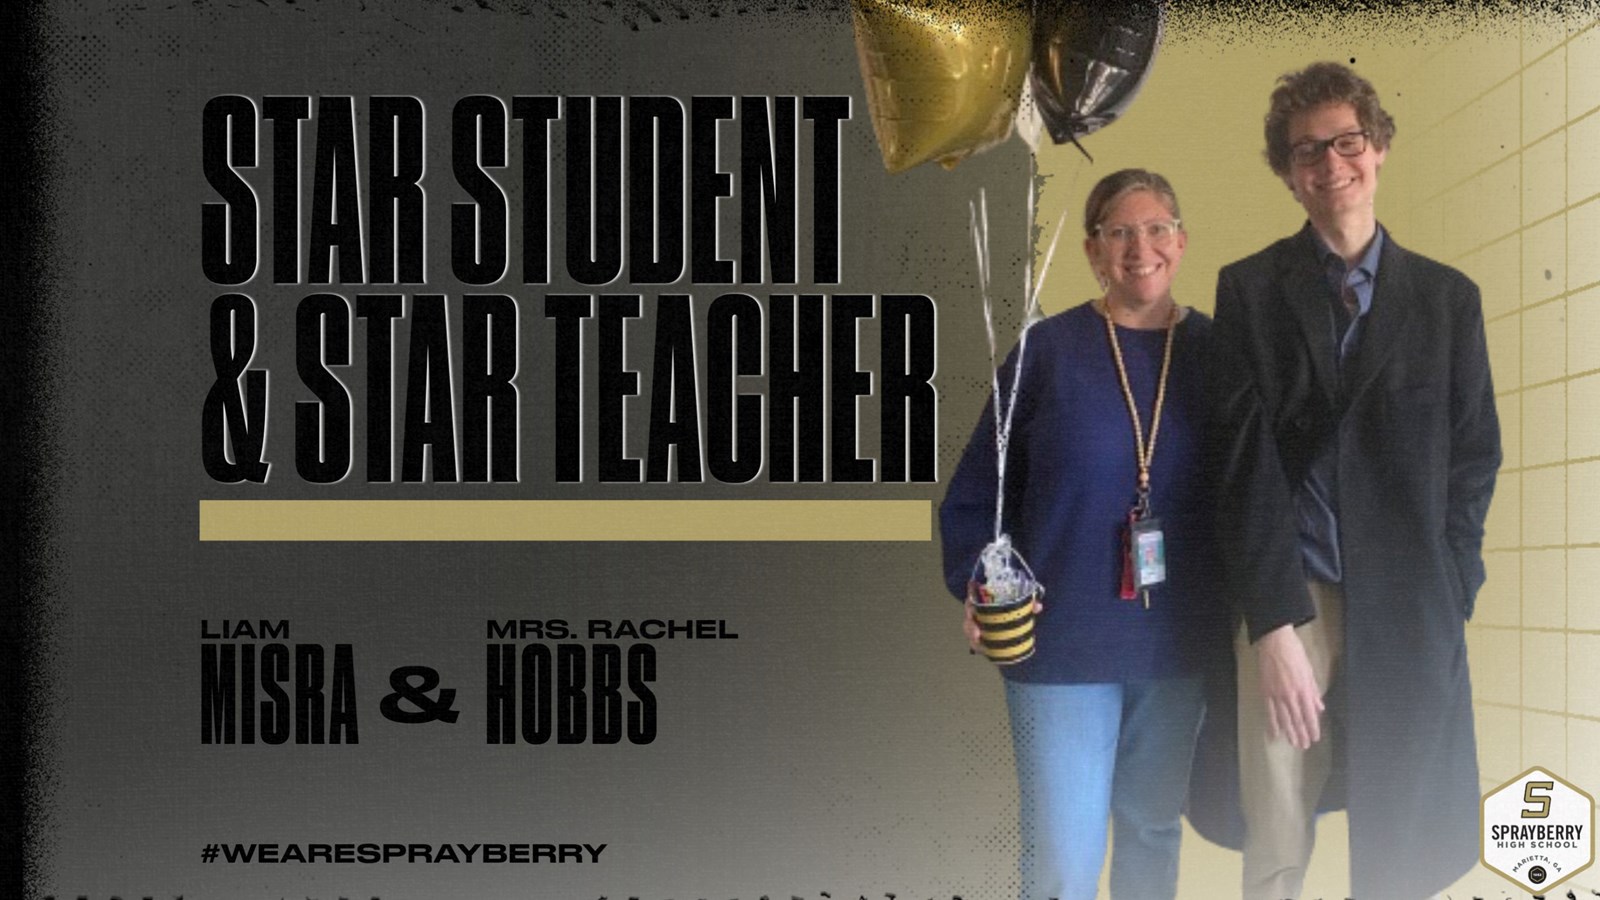 STAR Student and STAR Teacher | Sprayberry High School